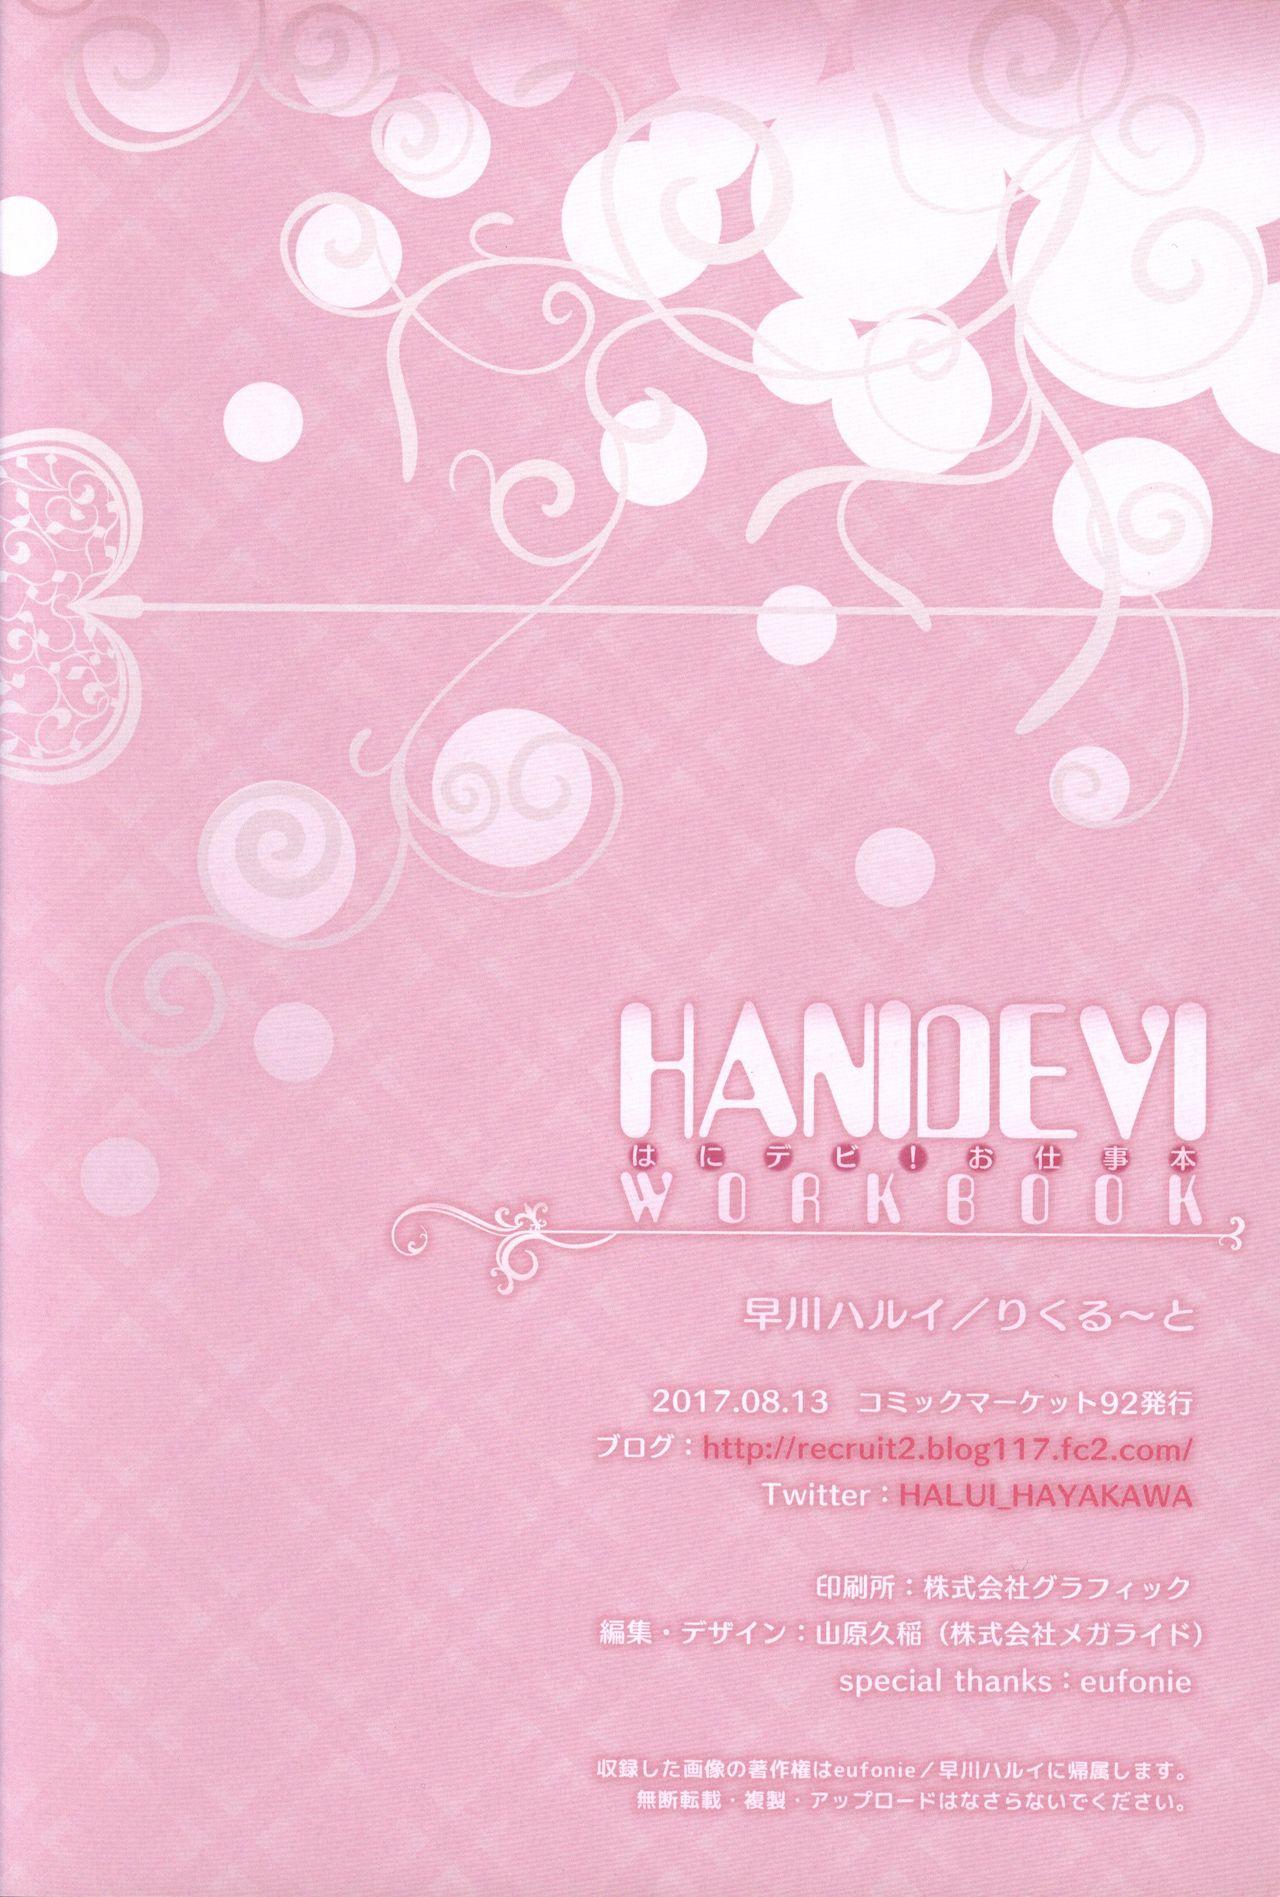 HANIDEVI WORK BOOK 48